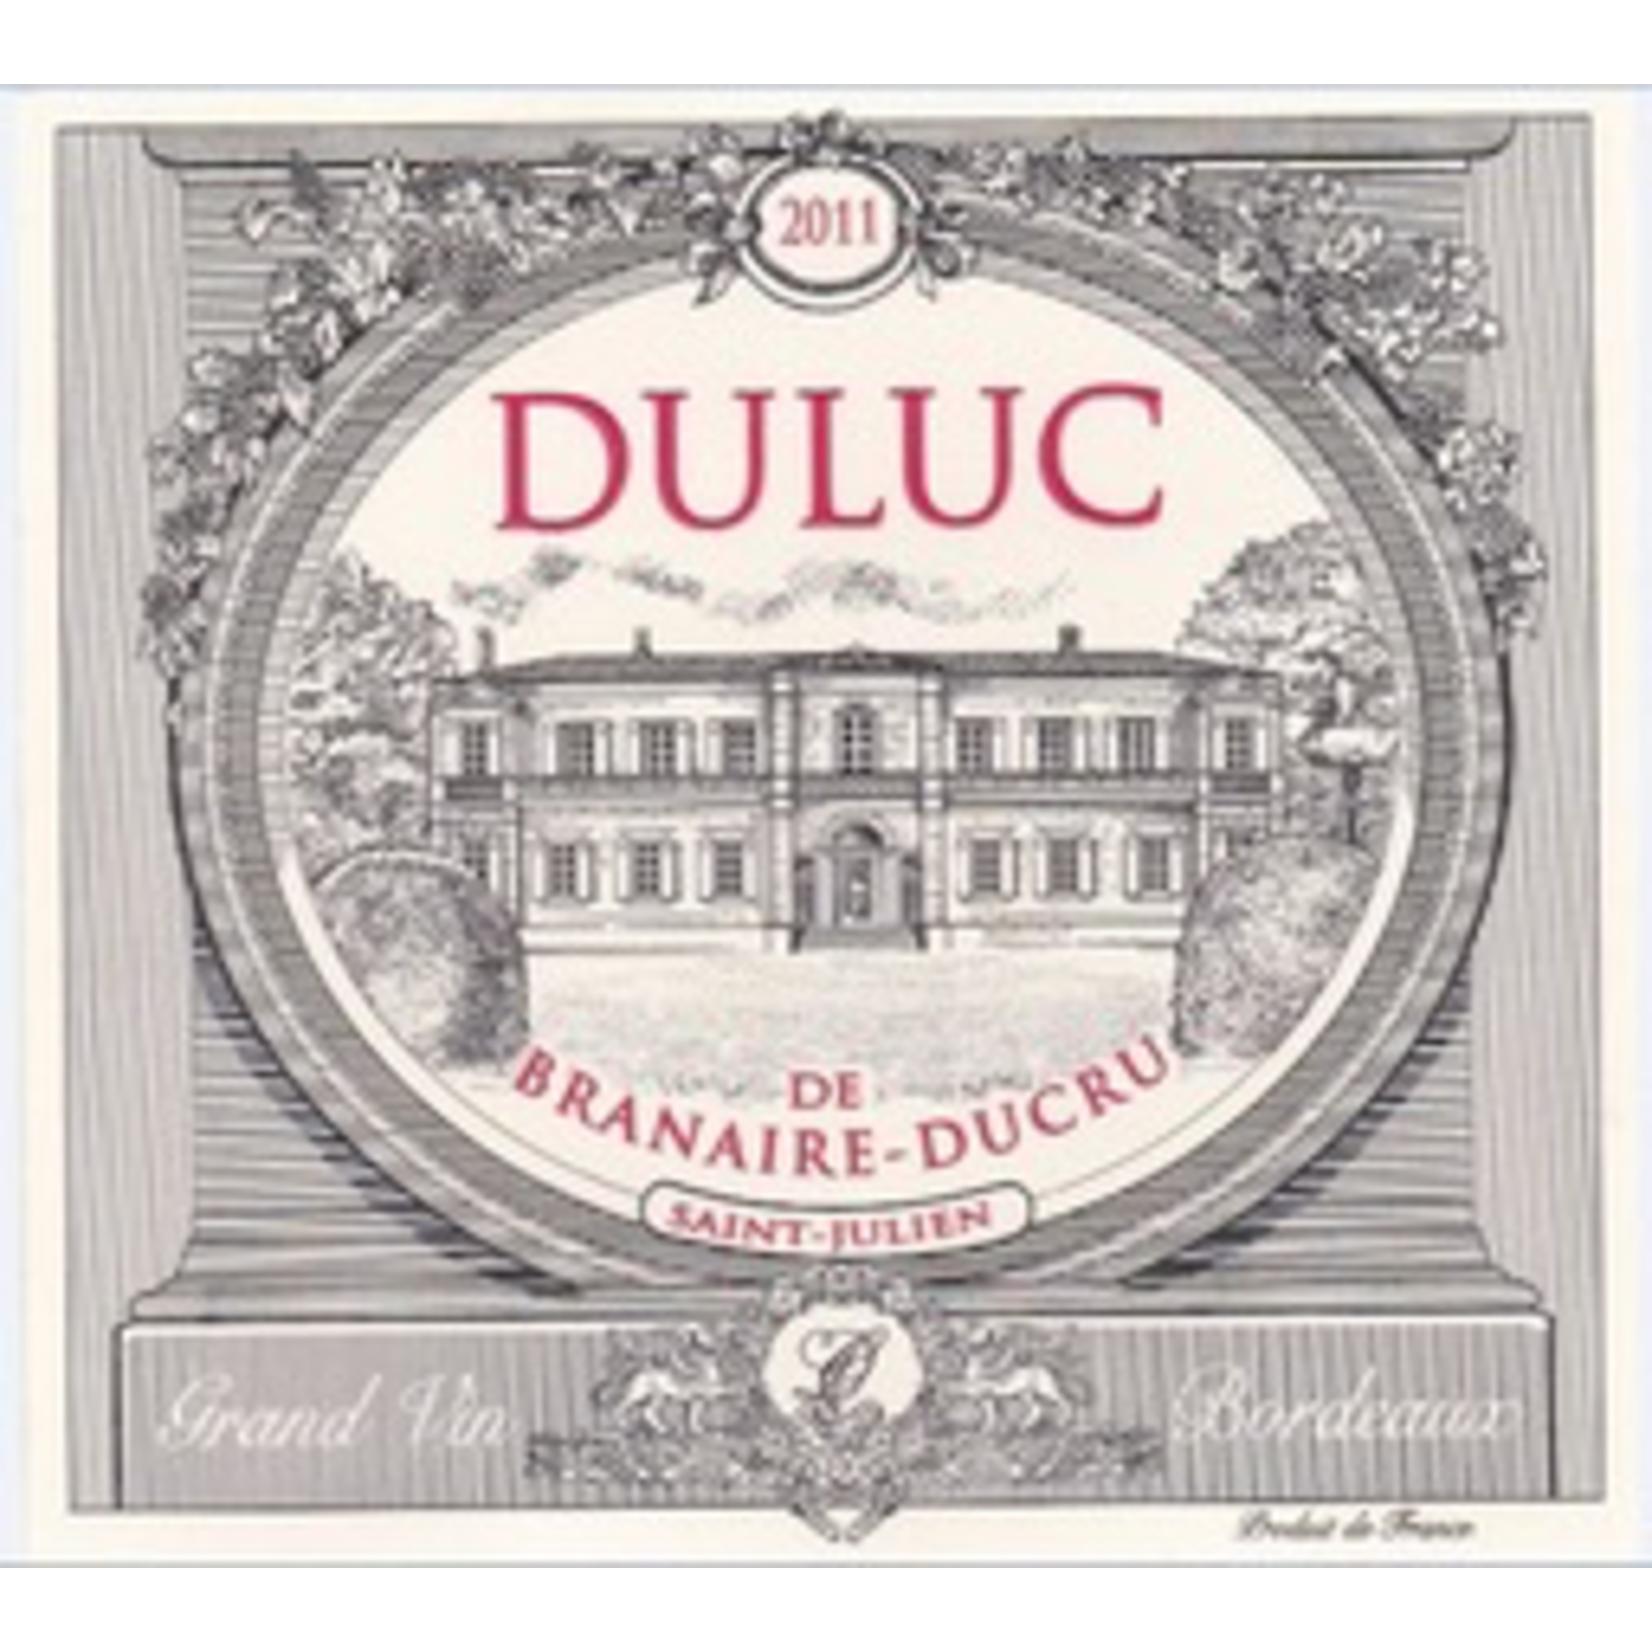 Wine Duluc de Branaire Ducru Saint Julien 2011